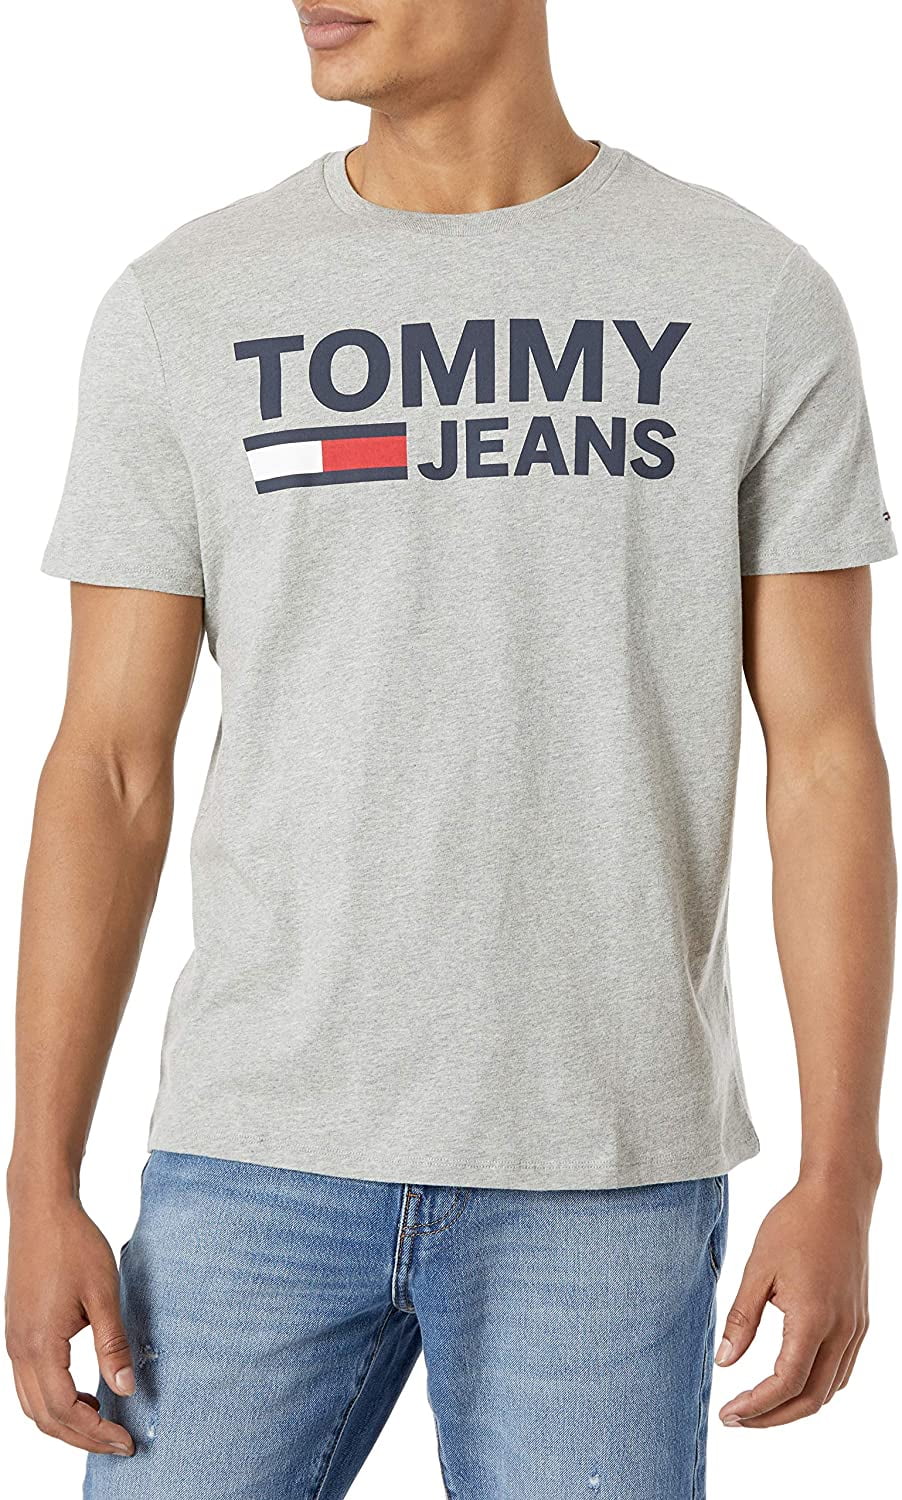 Tommy Hilfiger Short Sleeve Graphic T-Shirt XX-Large B10 Grey Walmart.com